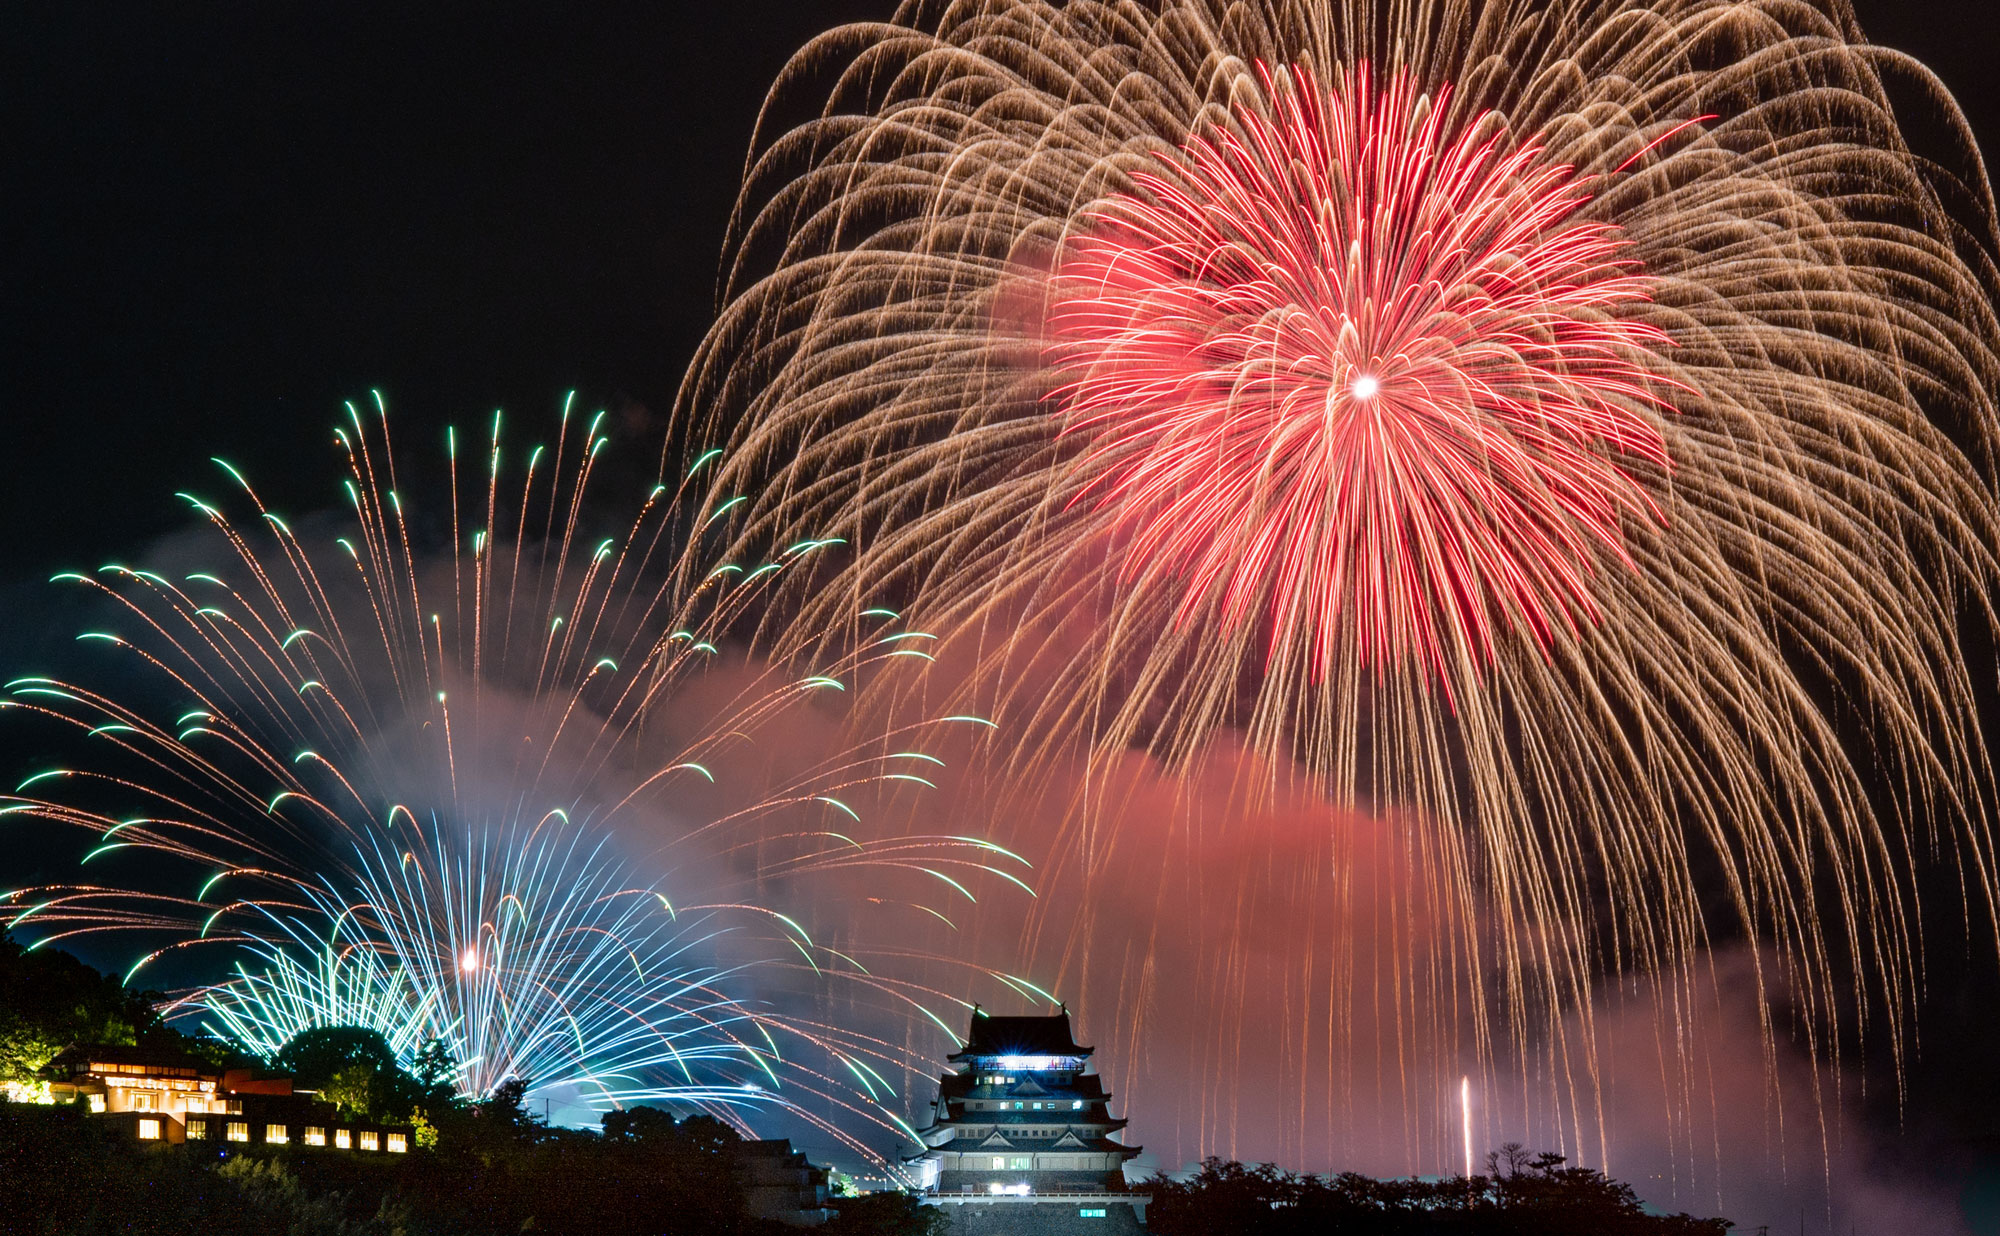 Atami Fireworks Festival with Atami Castle